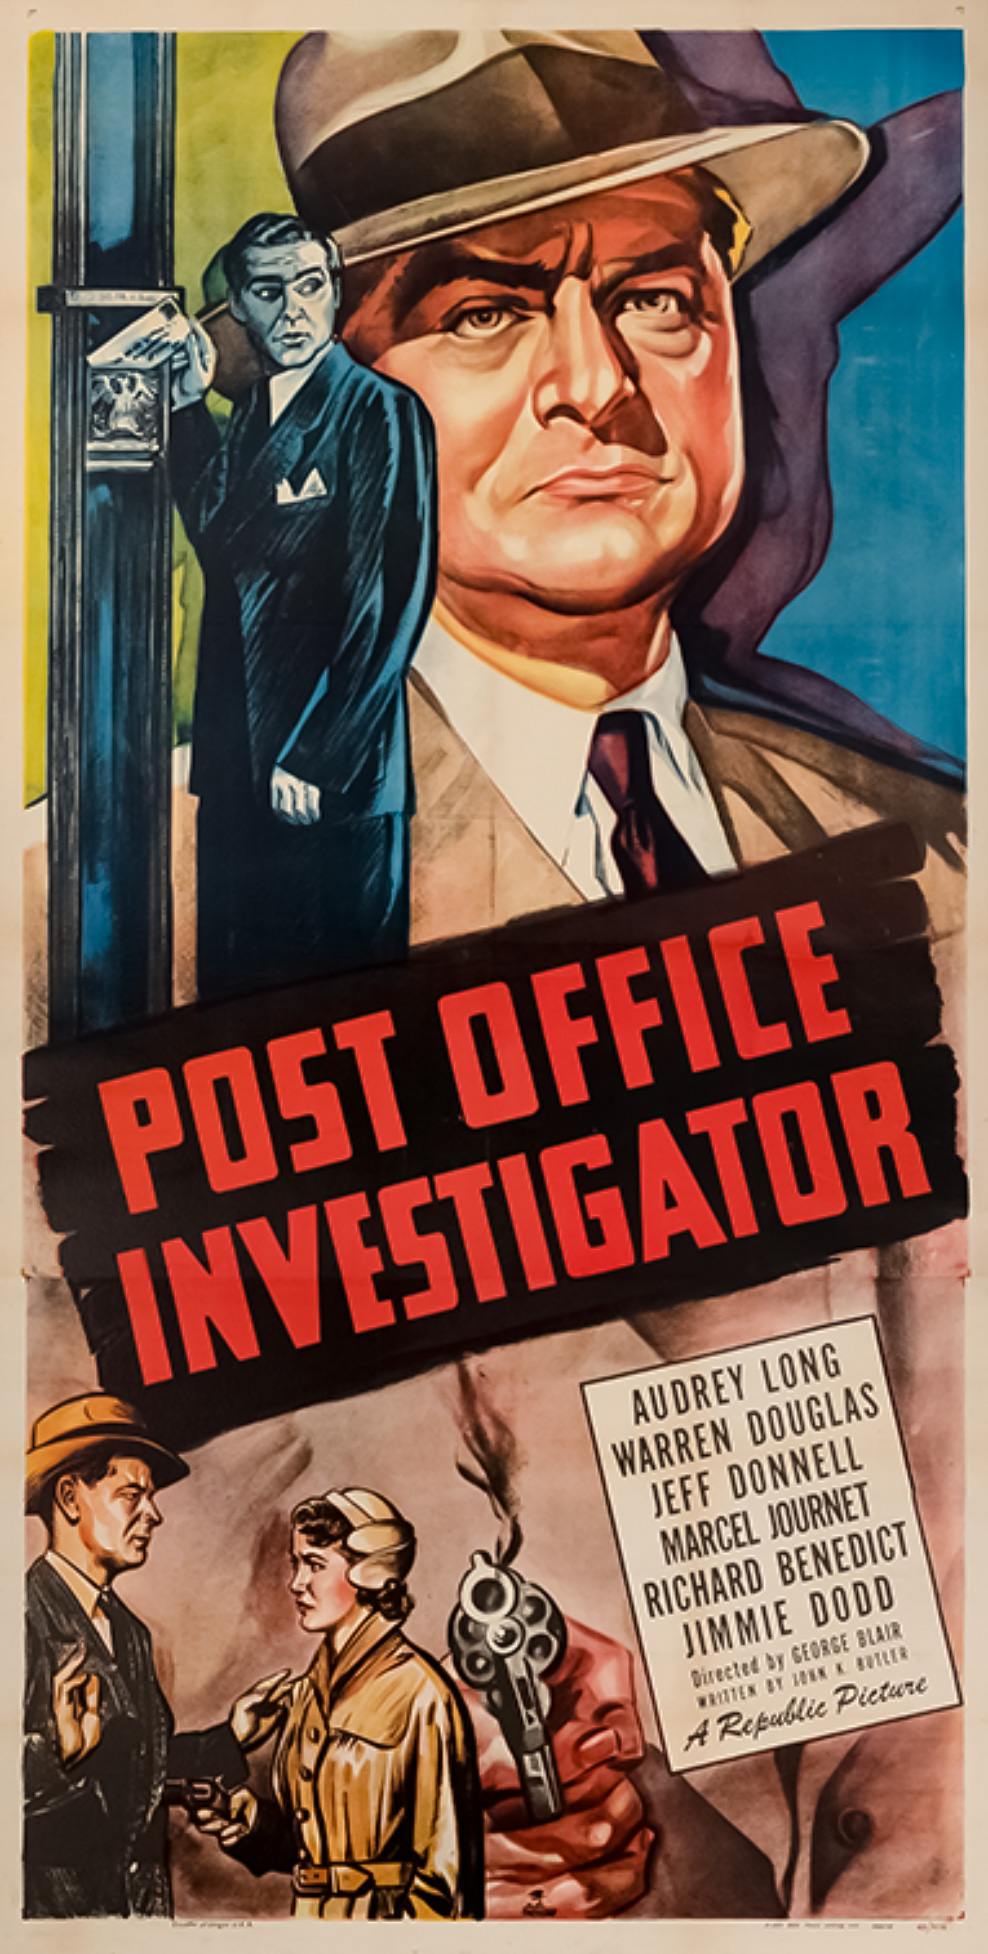 Post Office Investigator (1949) Screenshot 1